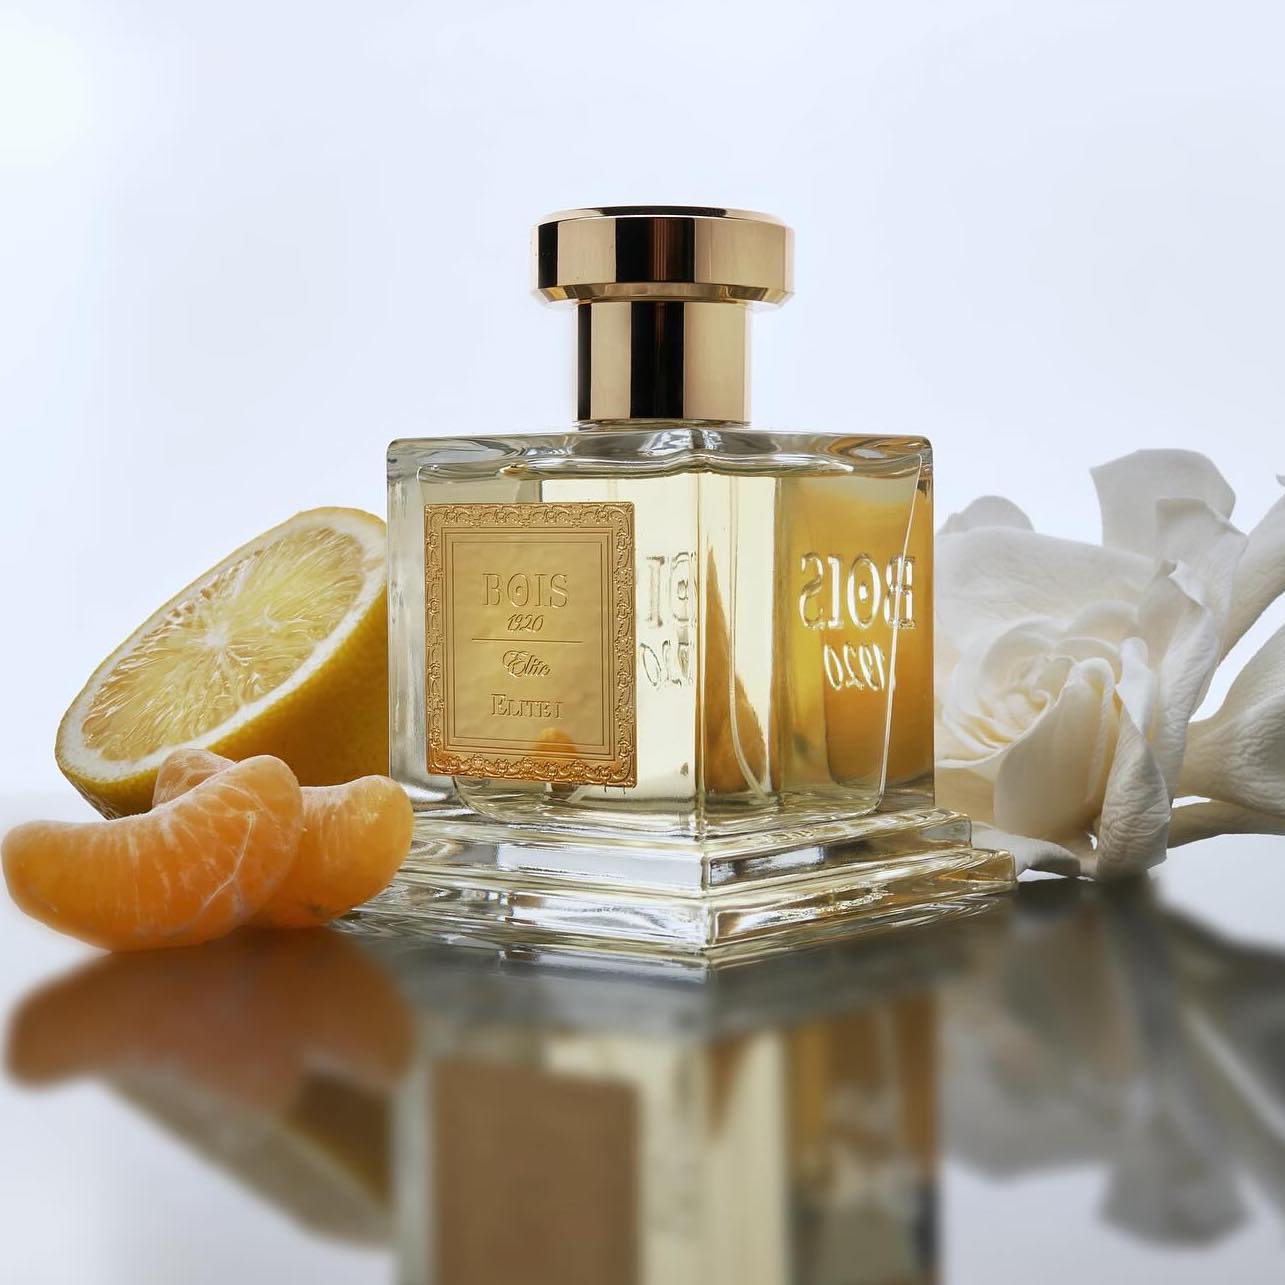 Bois 1920 Elite Ii Parfum | My Perfume Shop Australia